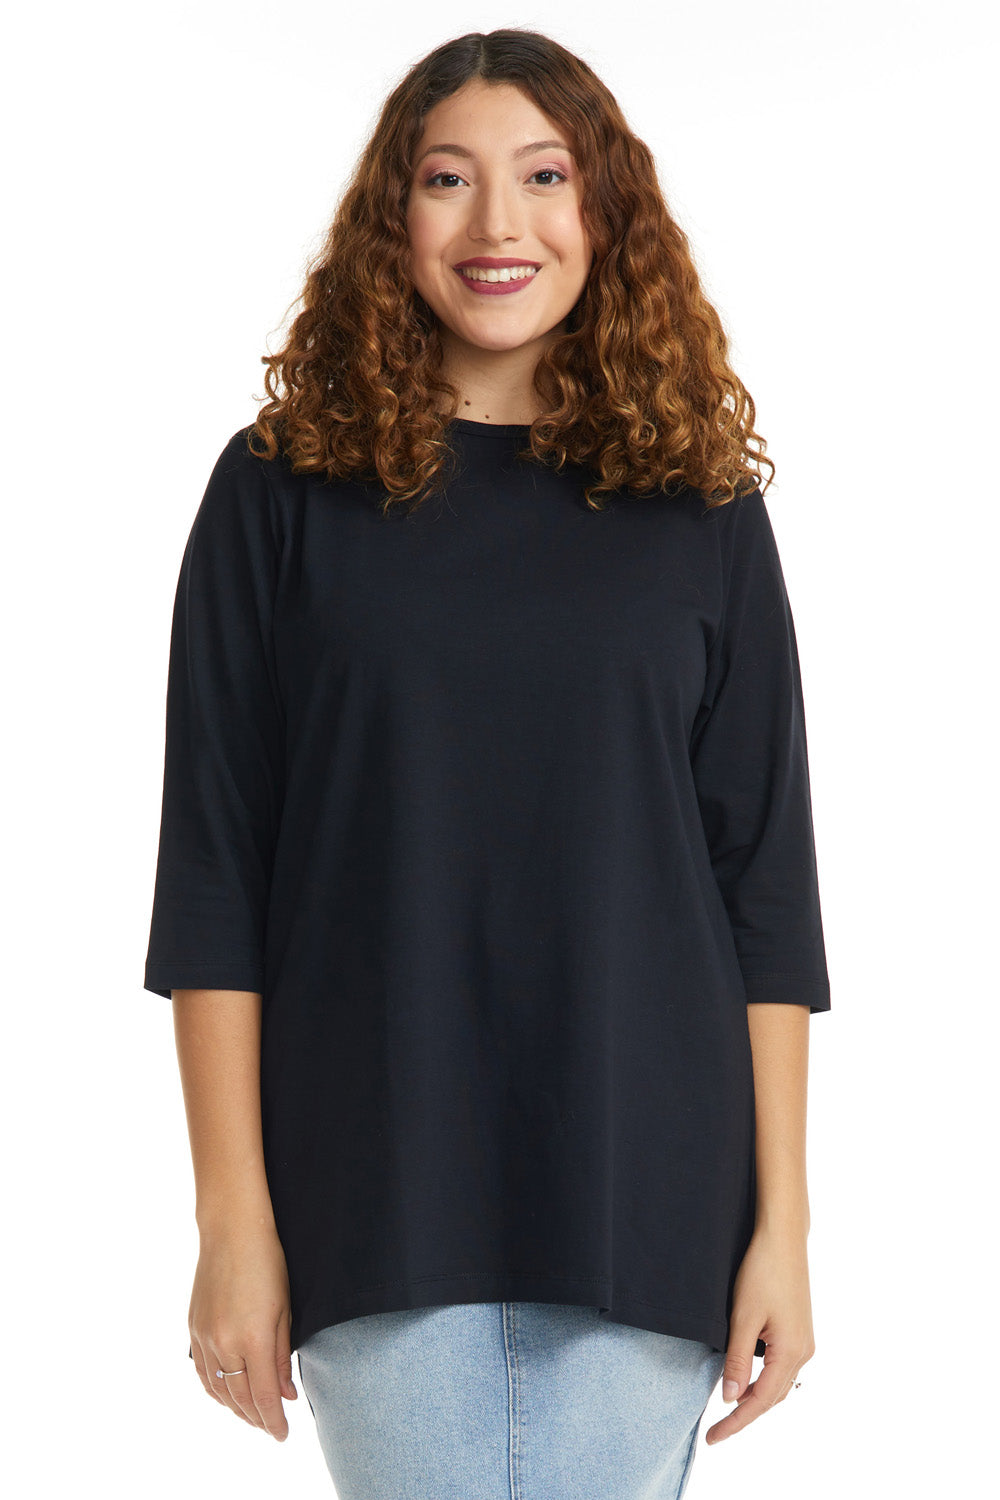 Plain Black 3/4 sleeve tunic t-shirt for women